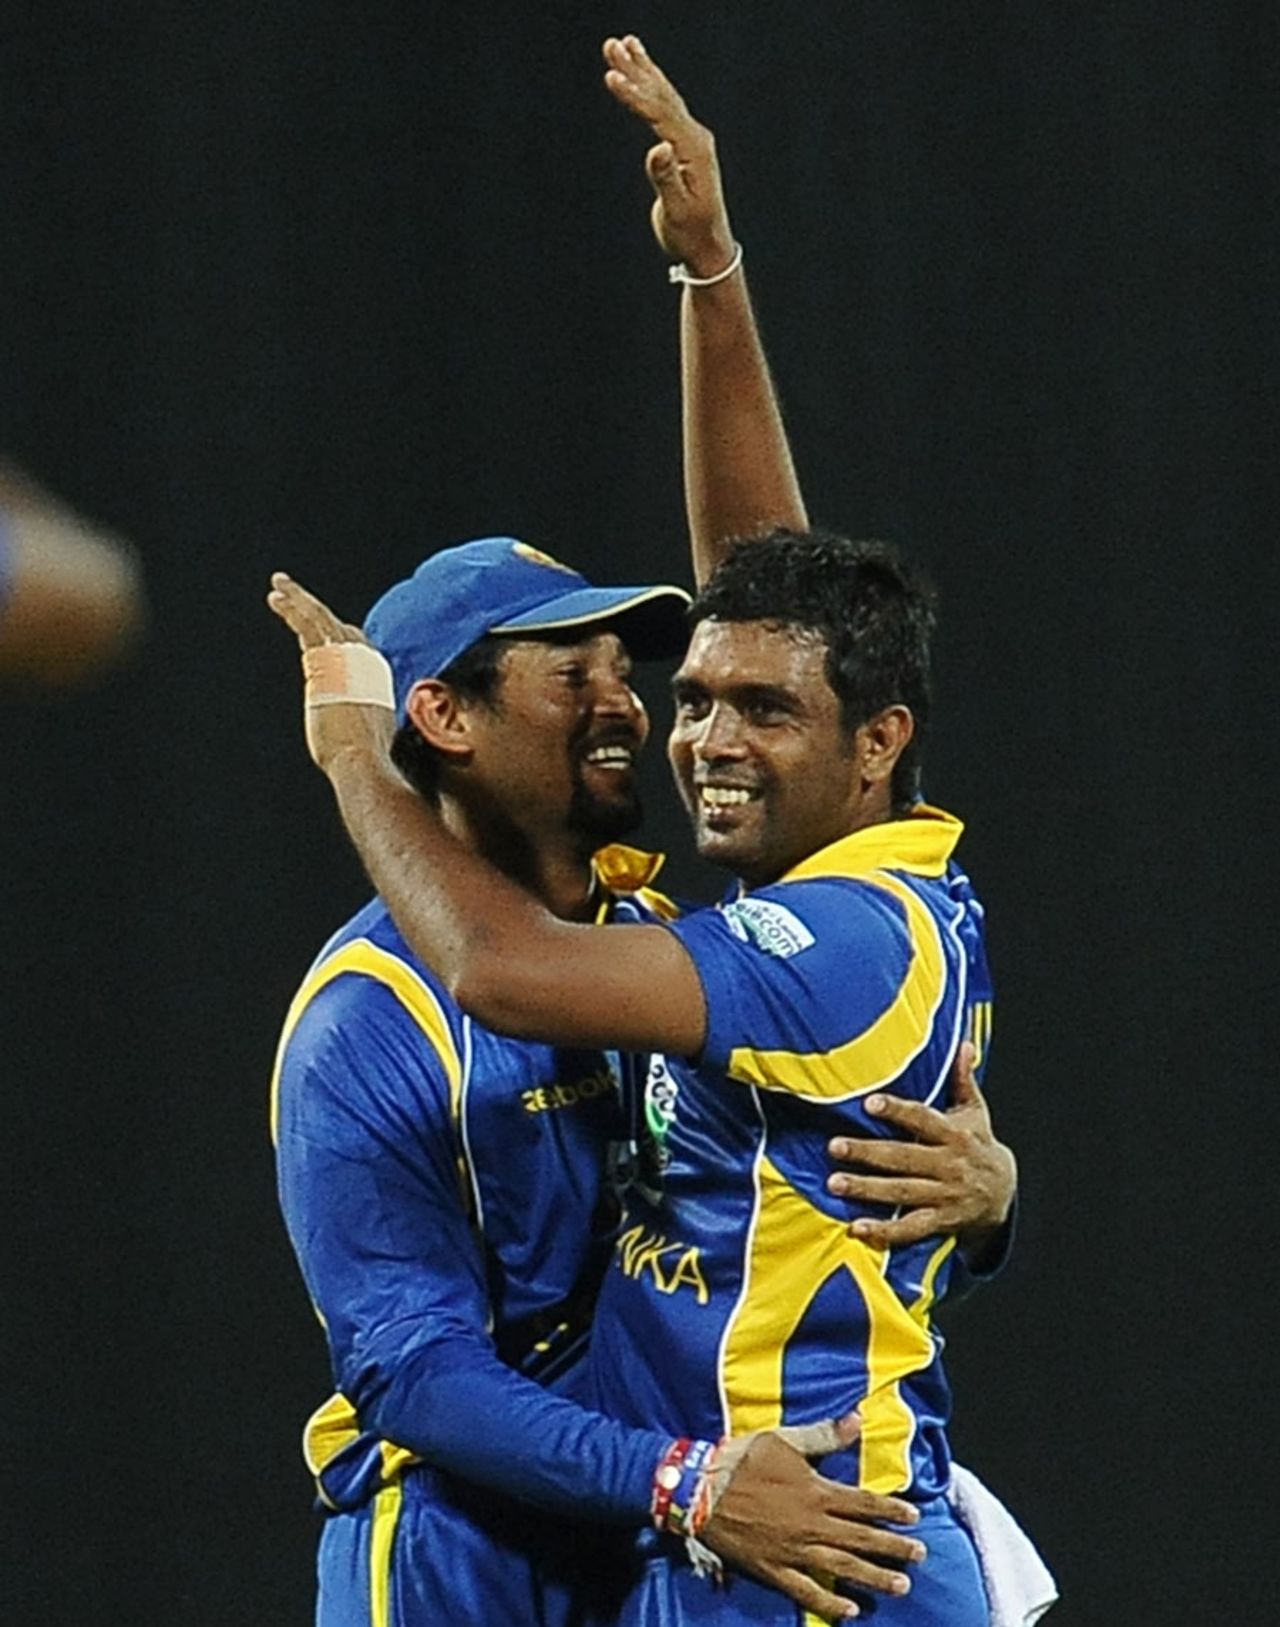 Tillakaratne Dilshan and debutant Dilruwan Perera celebrate a wicket, Sri Lanka v Australia, 1st Twenty20, Pallekele, August 6, 2011